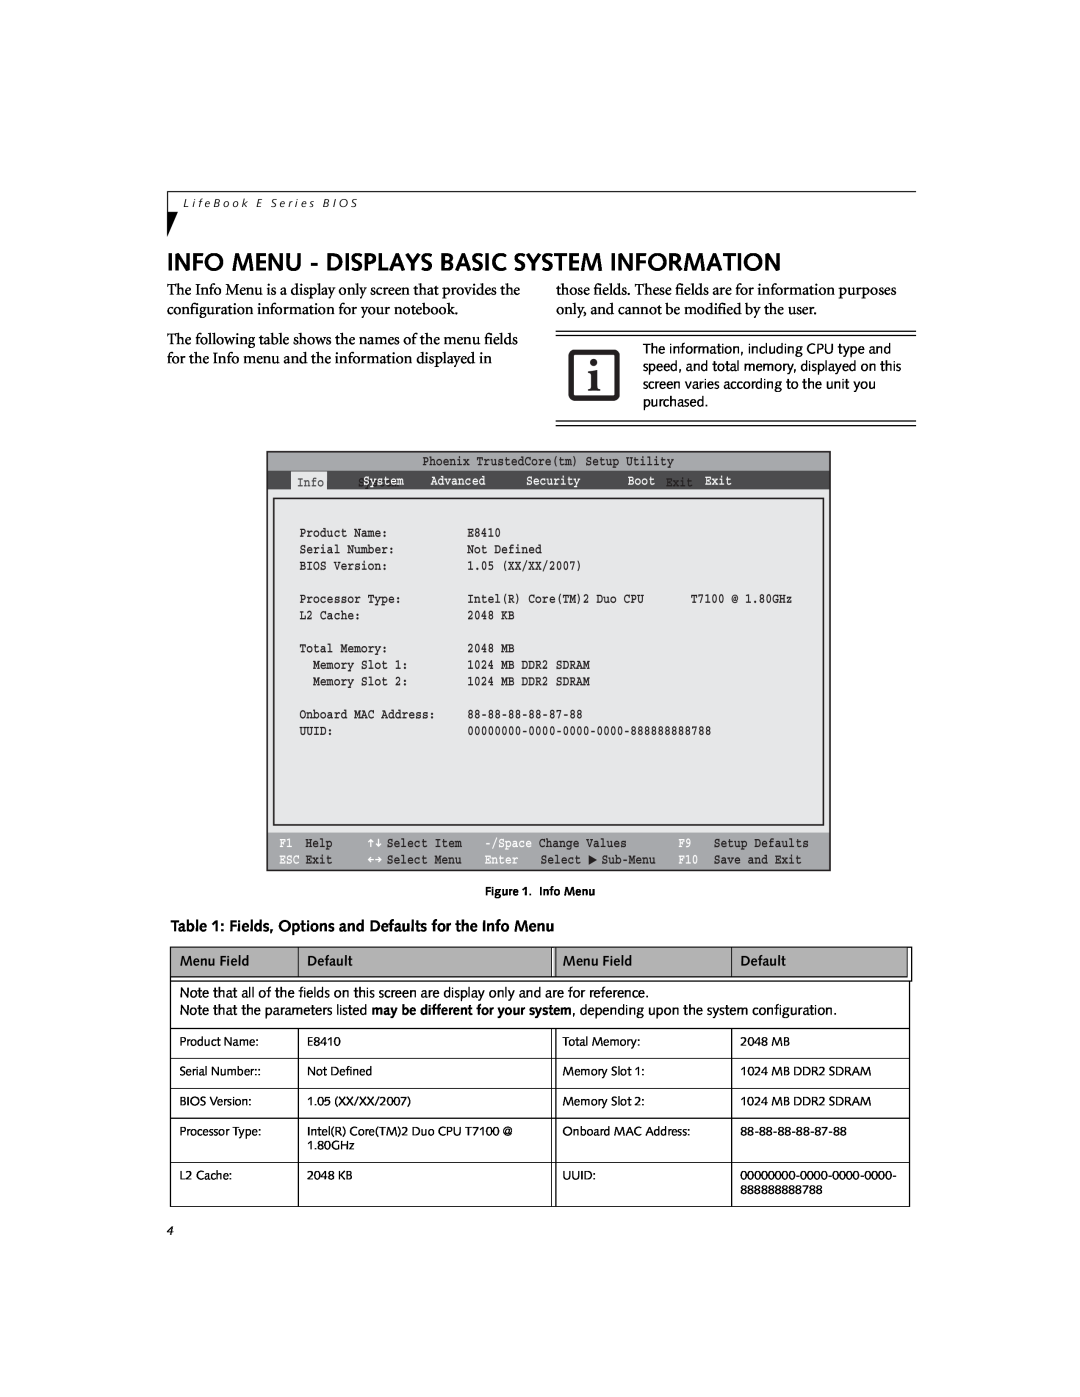 Fujitsu E8410 manual Info Menu - Displays Basic System Information, Fields, Options and Defaults for the Info Menu 